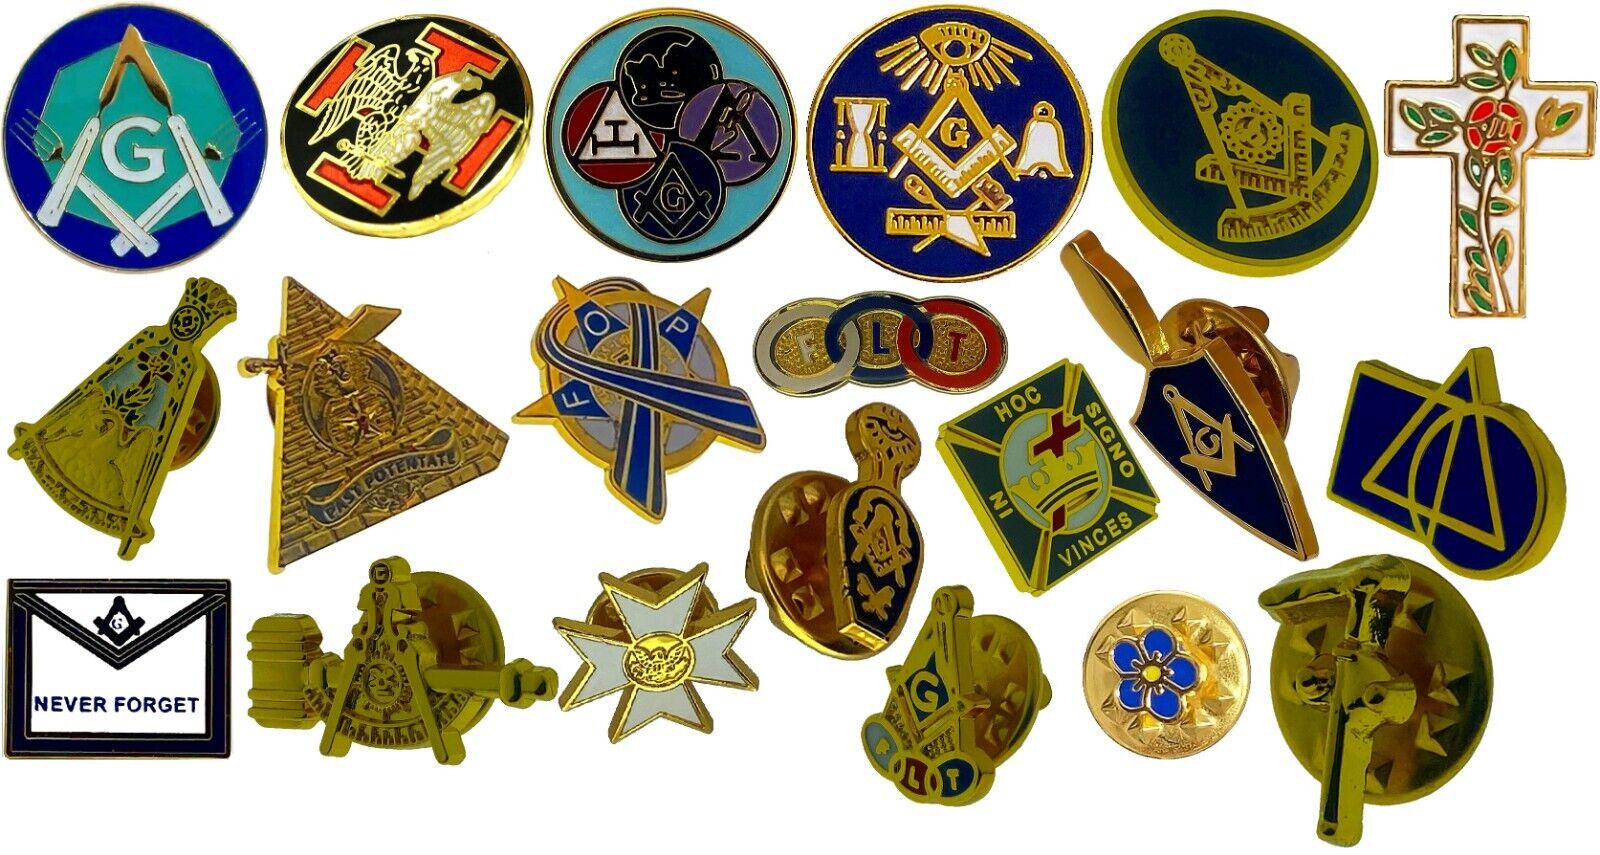 20 PC Lot Masonic Assorted Lapel Pins Knight Templar York Rite Malta Past Master